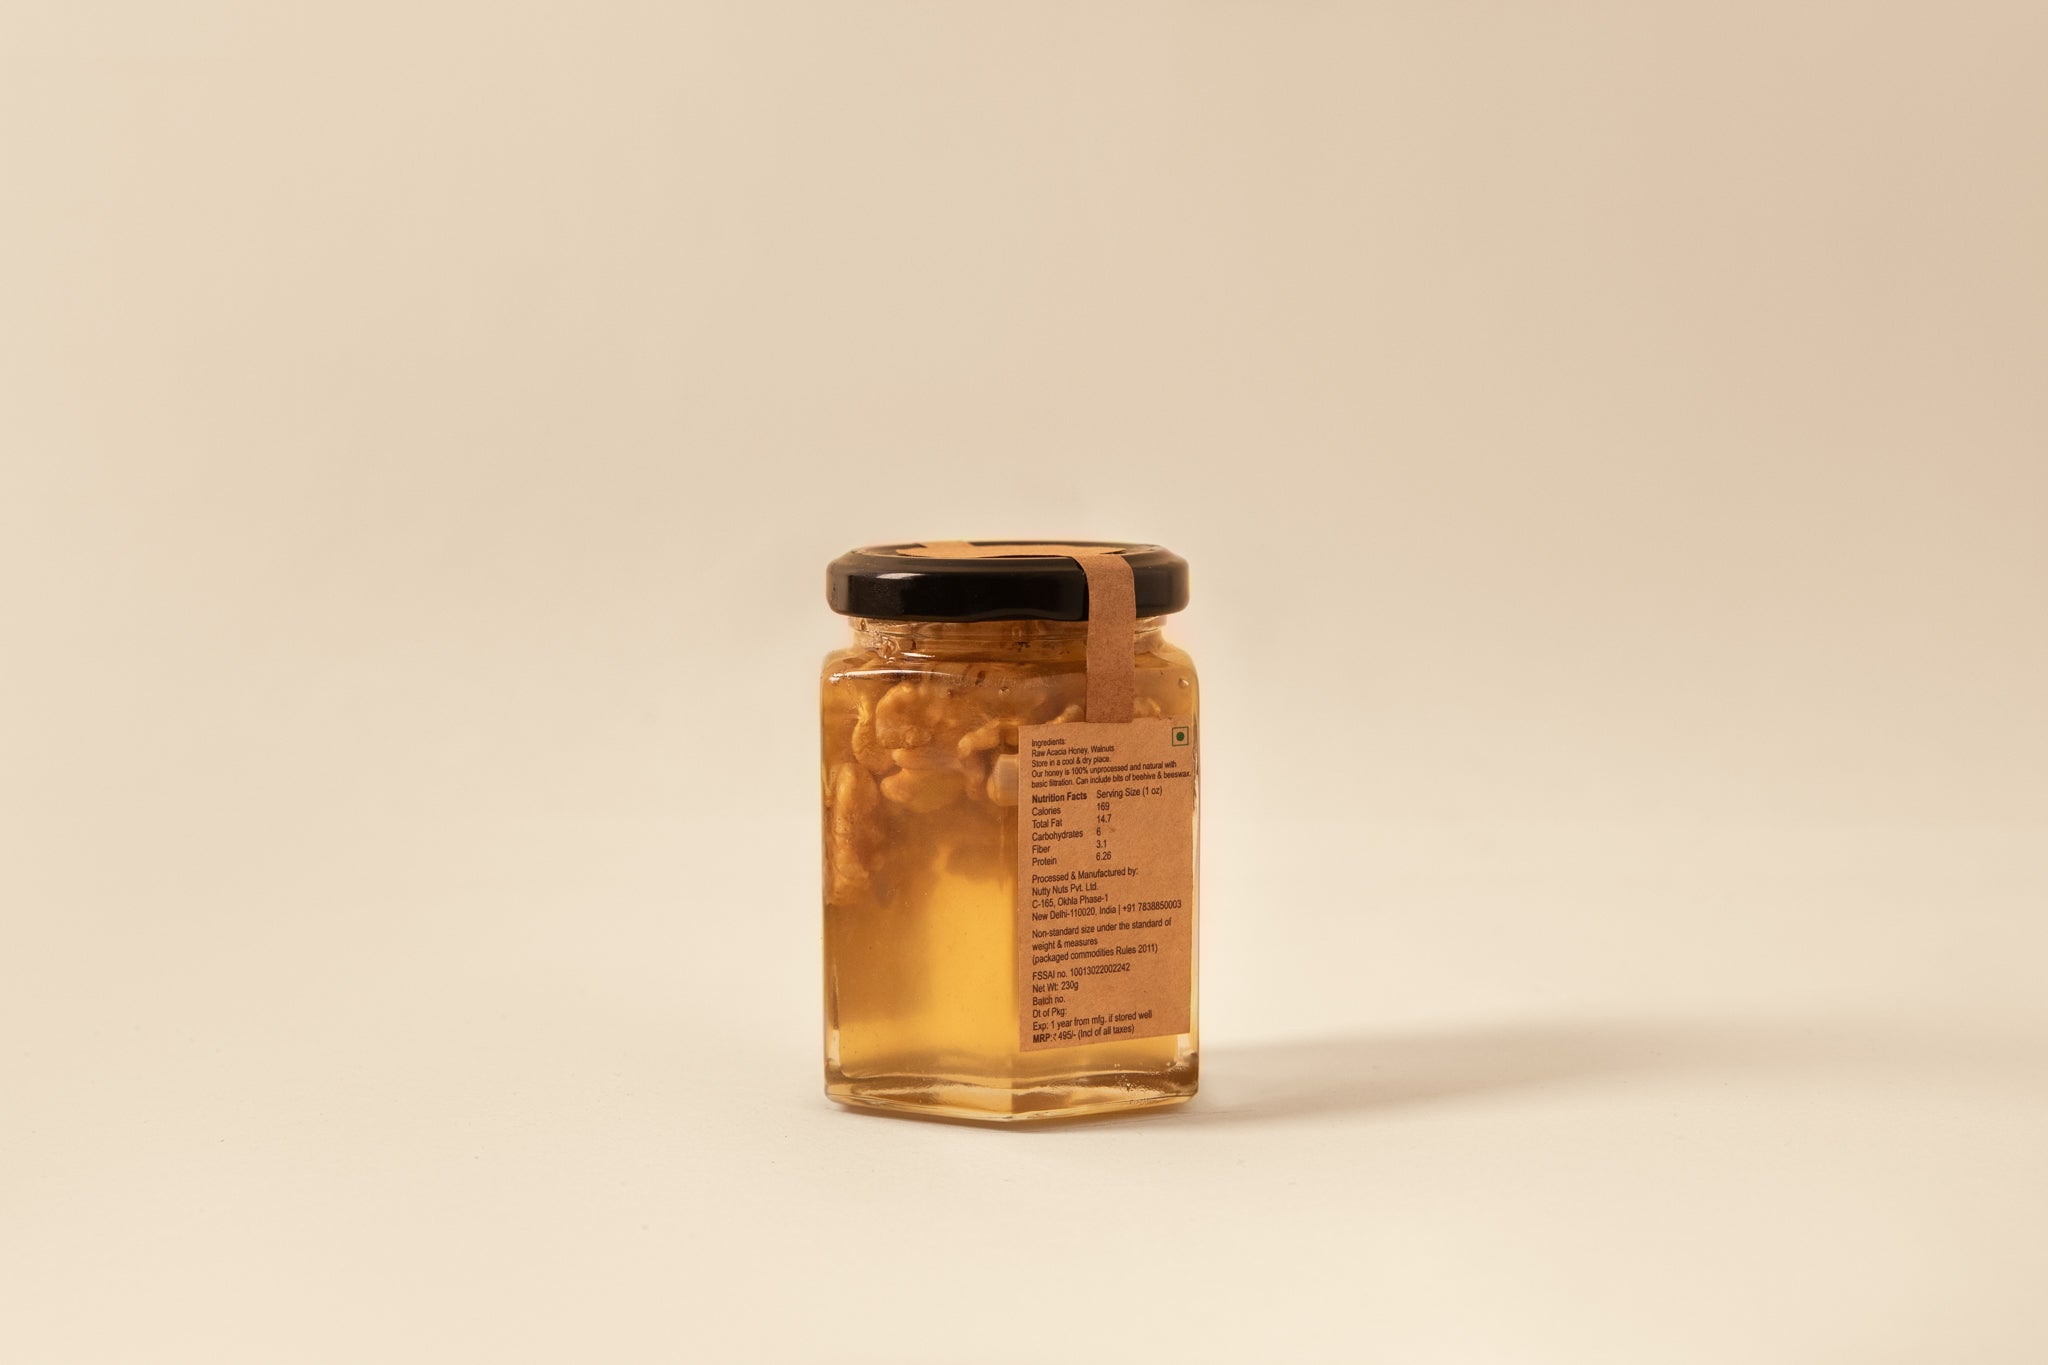 Raw Acacia honey and walnuts from Kashmir